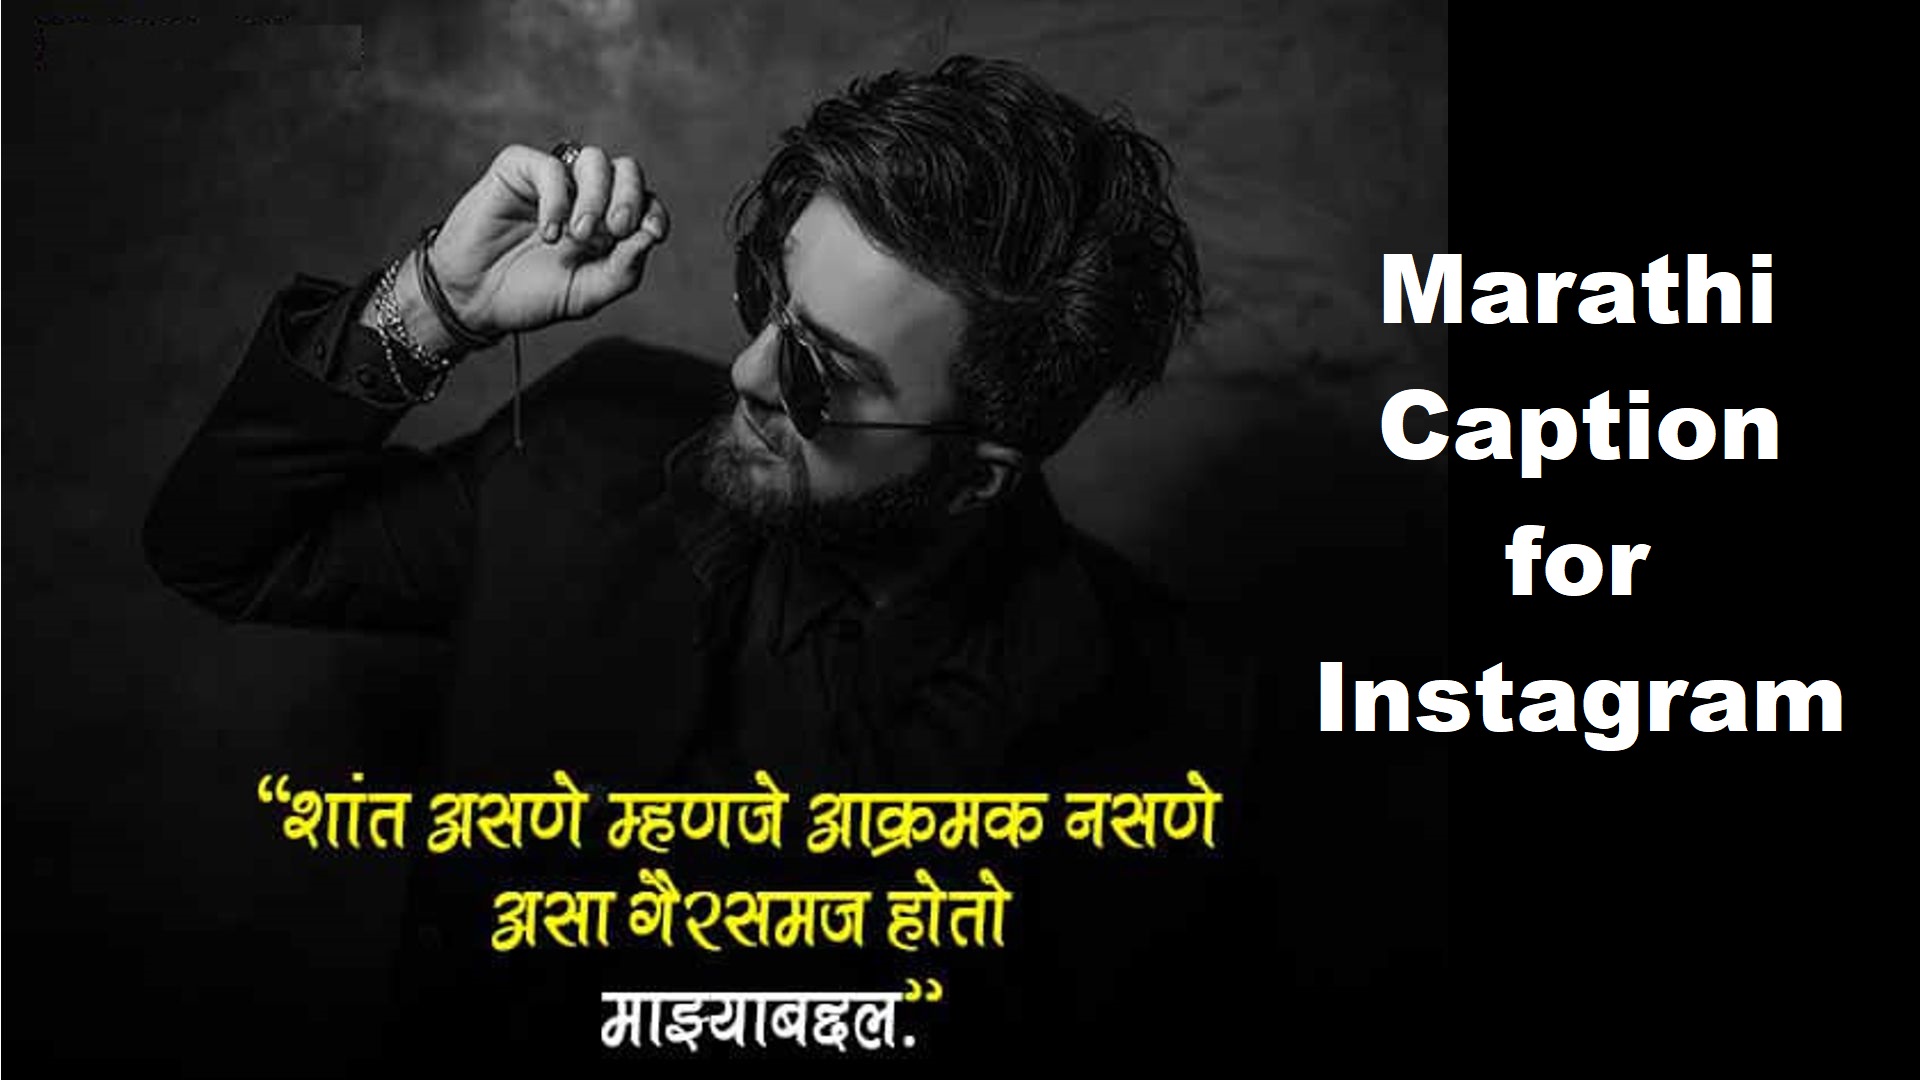 Marathi Caption for Instagram